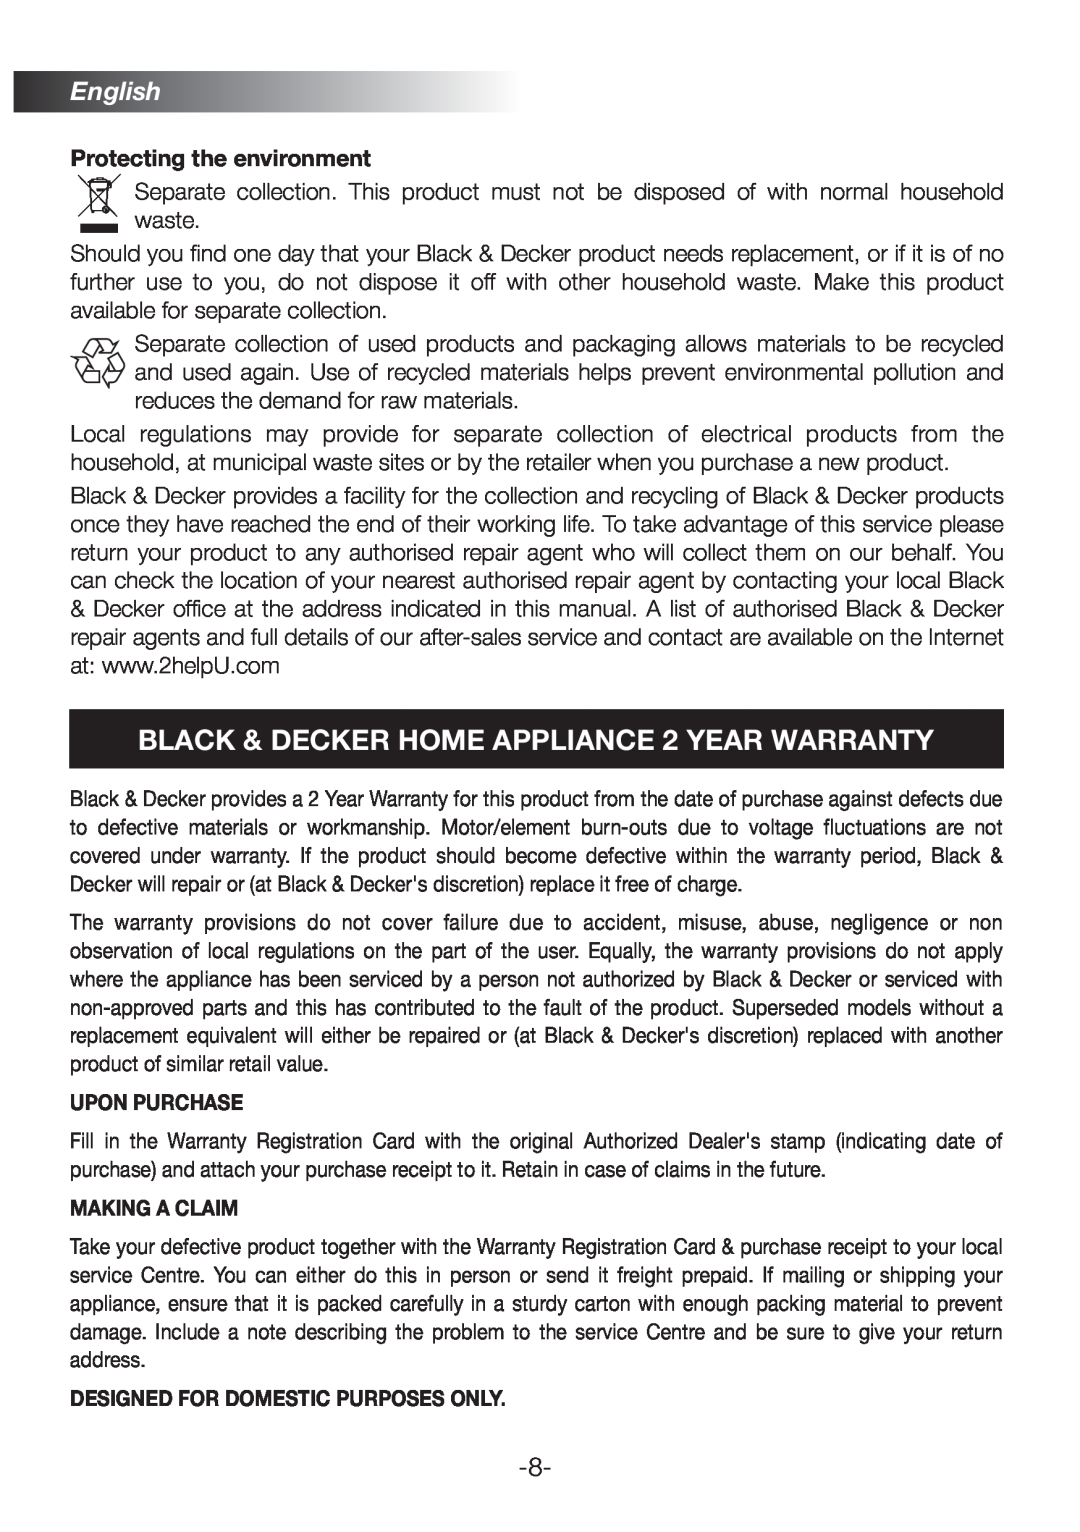 Black & Decker BX380G manual BLACK & DECKER HOME APPLIANCE 2 YEAR WARRANTY, English, Protecting the environment 